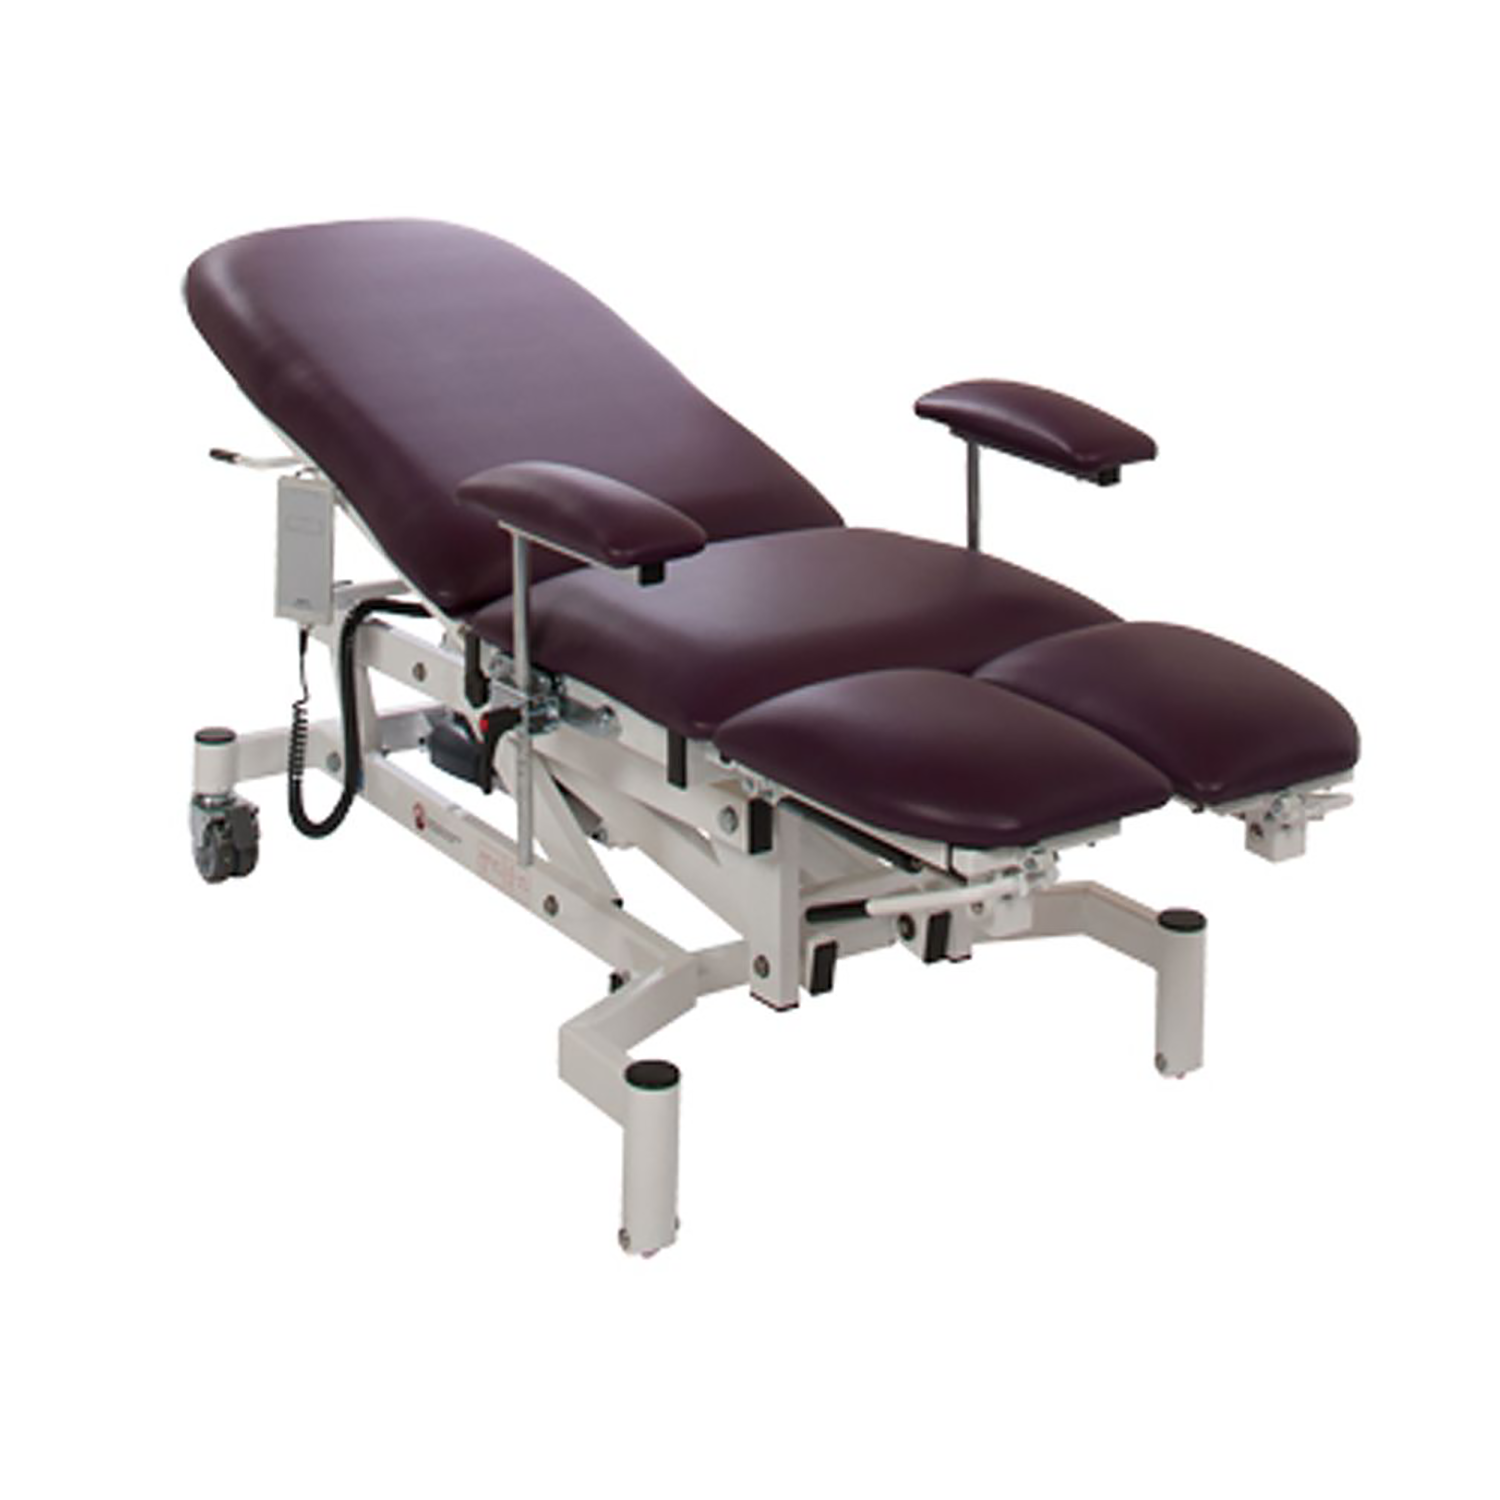 Doherty Vari-height Treatment Chair (1)